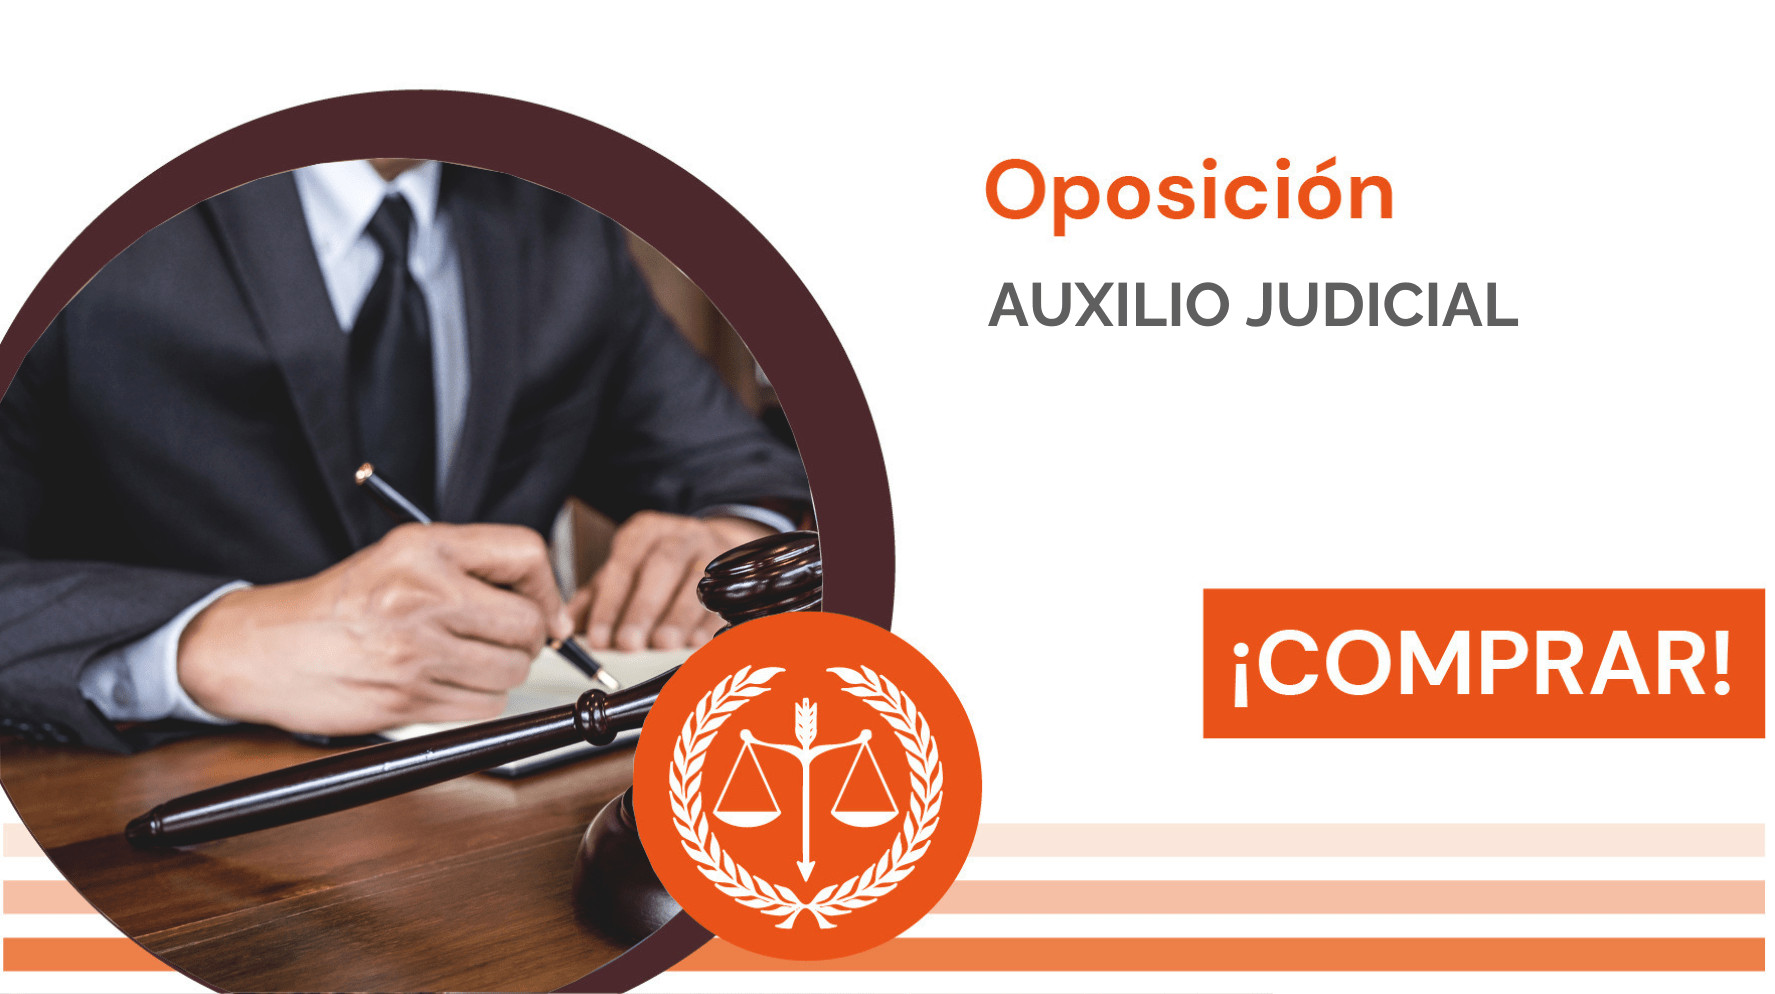 Oposición Auxilio Judicial